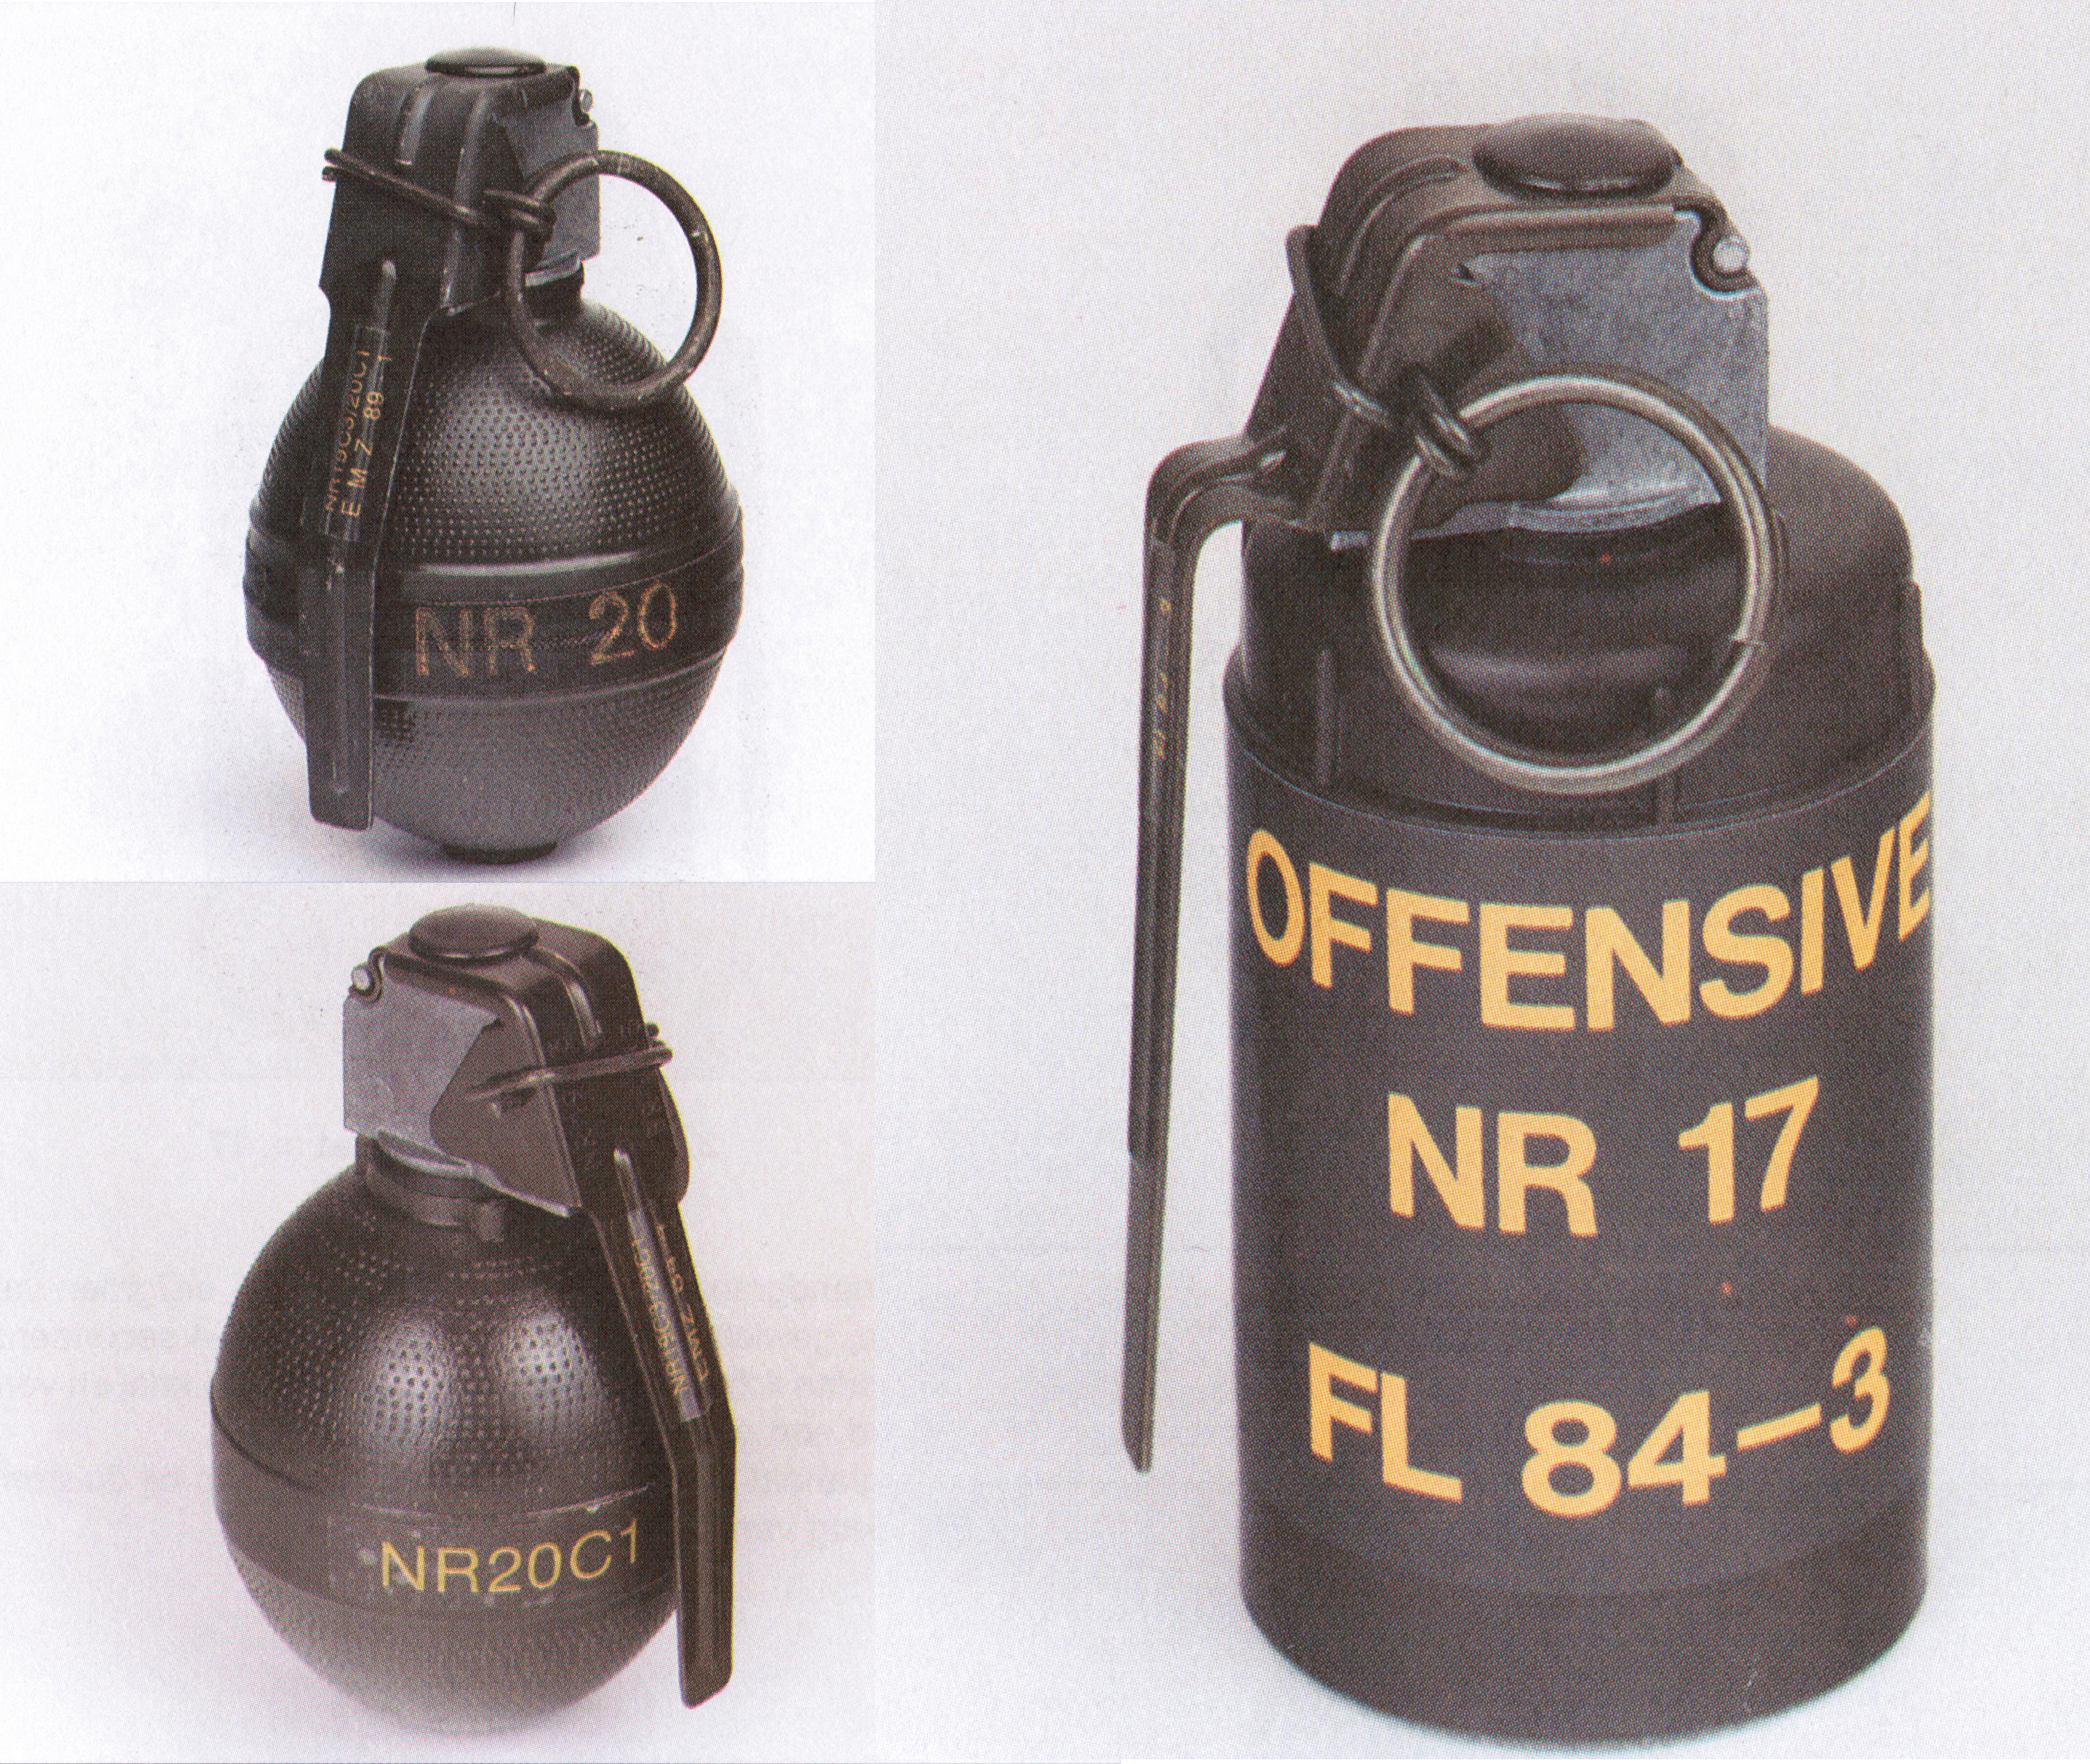 The nr. 20, nr. 20C1, and nr. 17 grenades